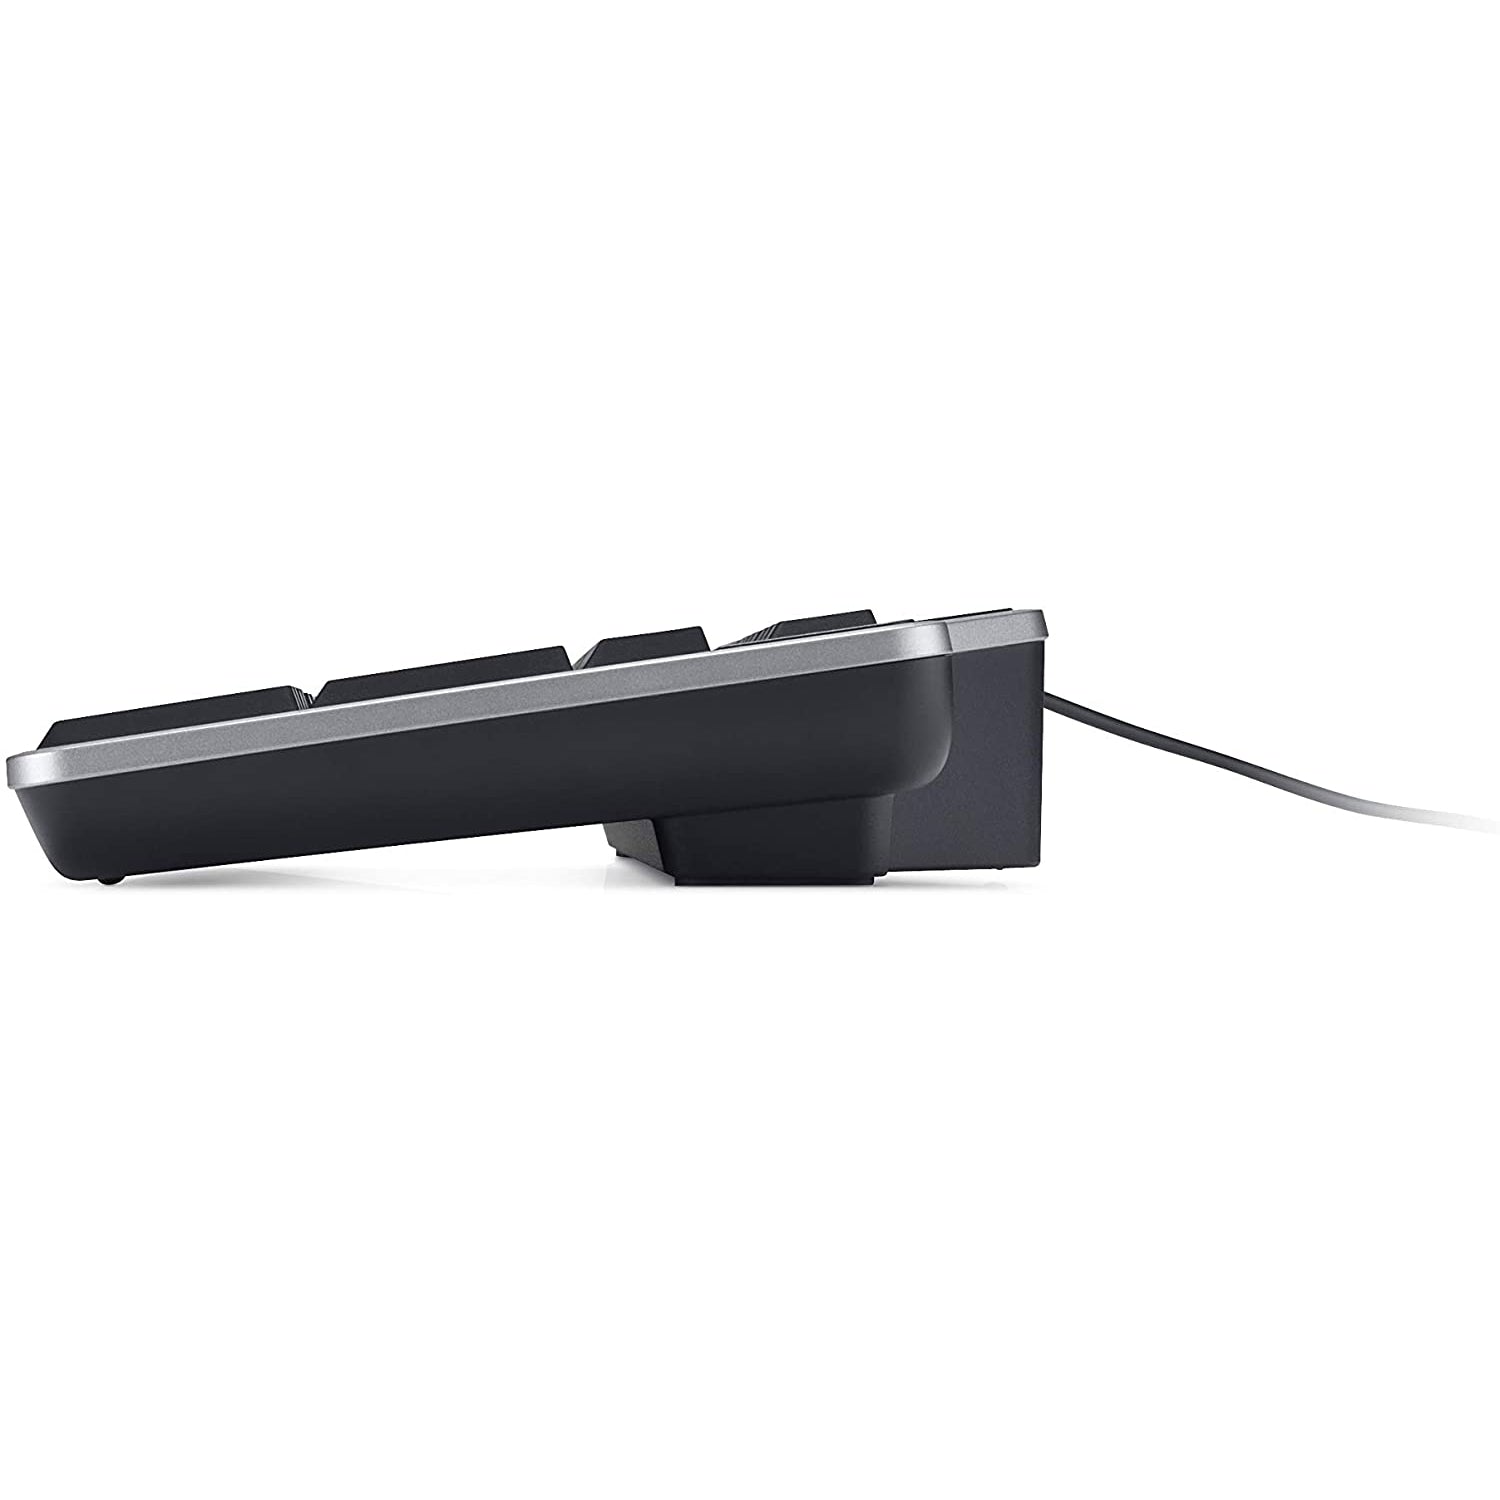 Dell KB-813 Smartcard Reader USB Keyboard, Black